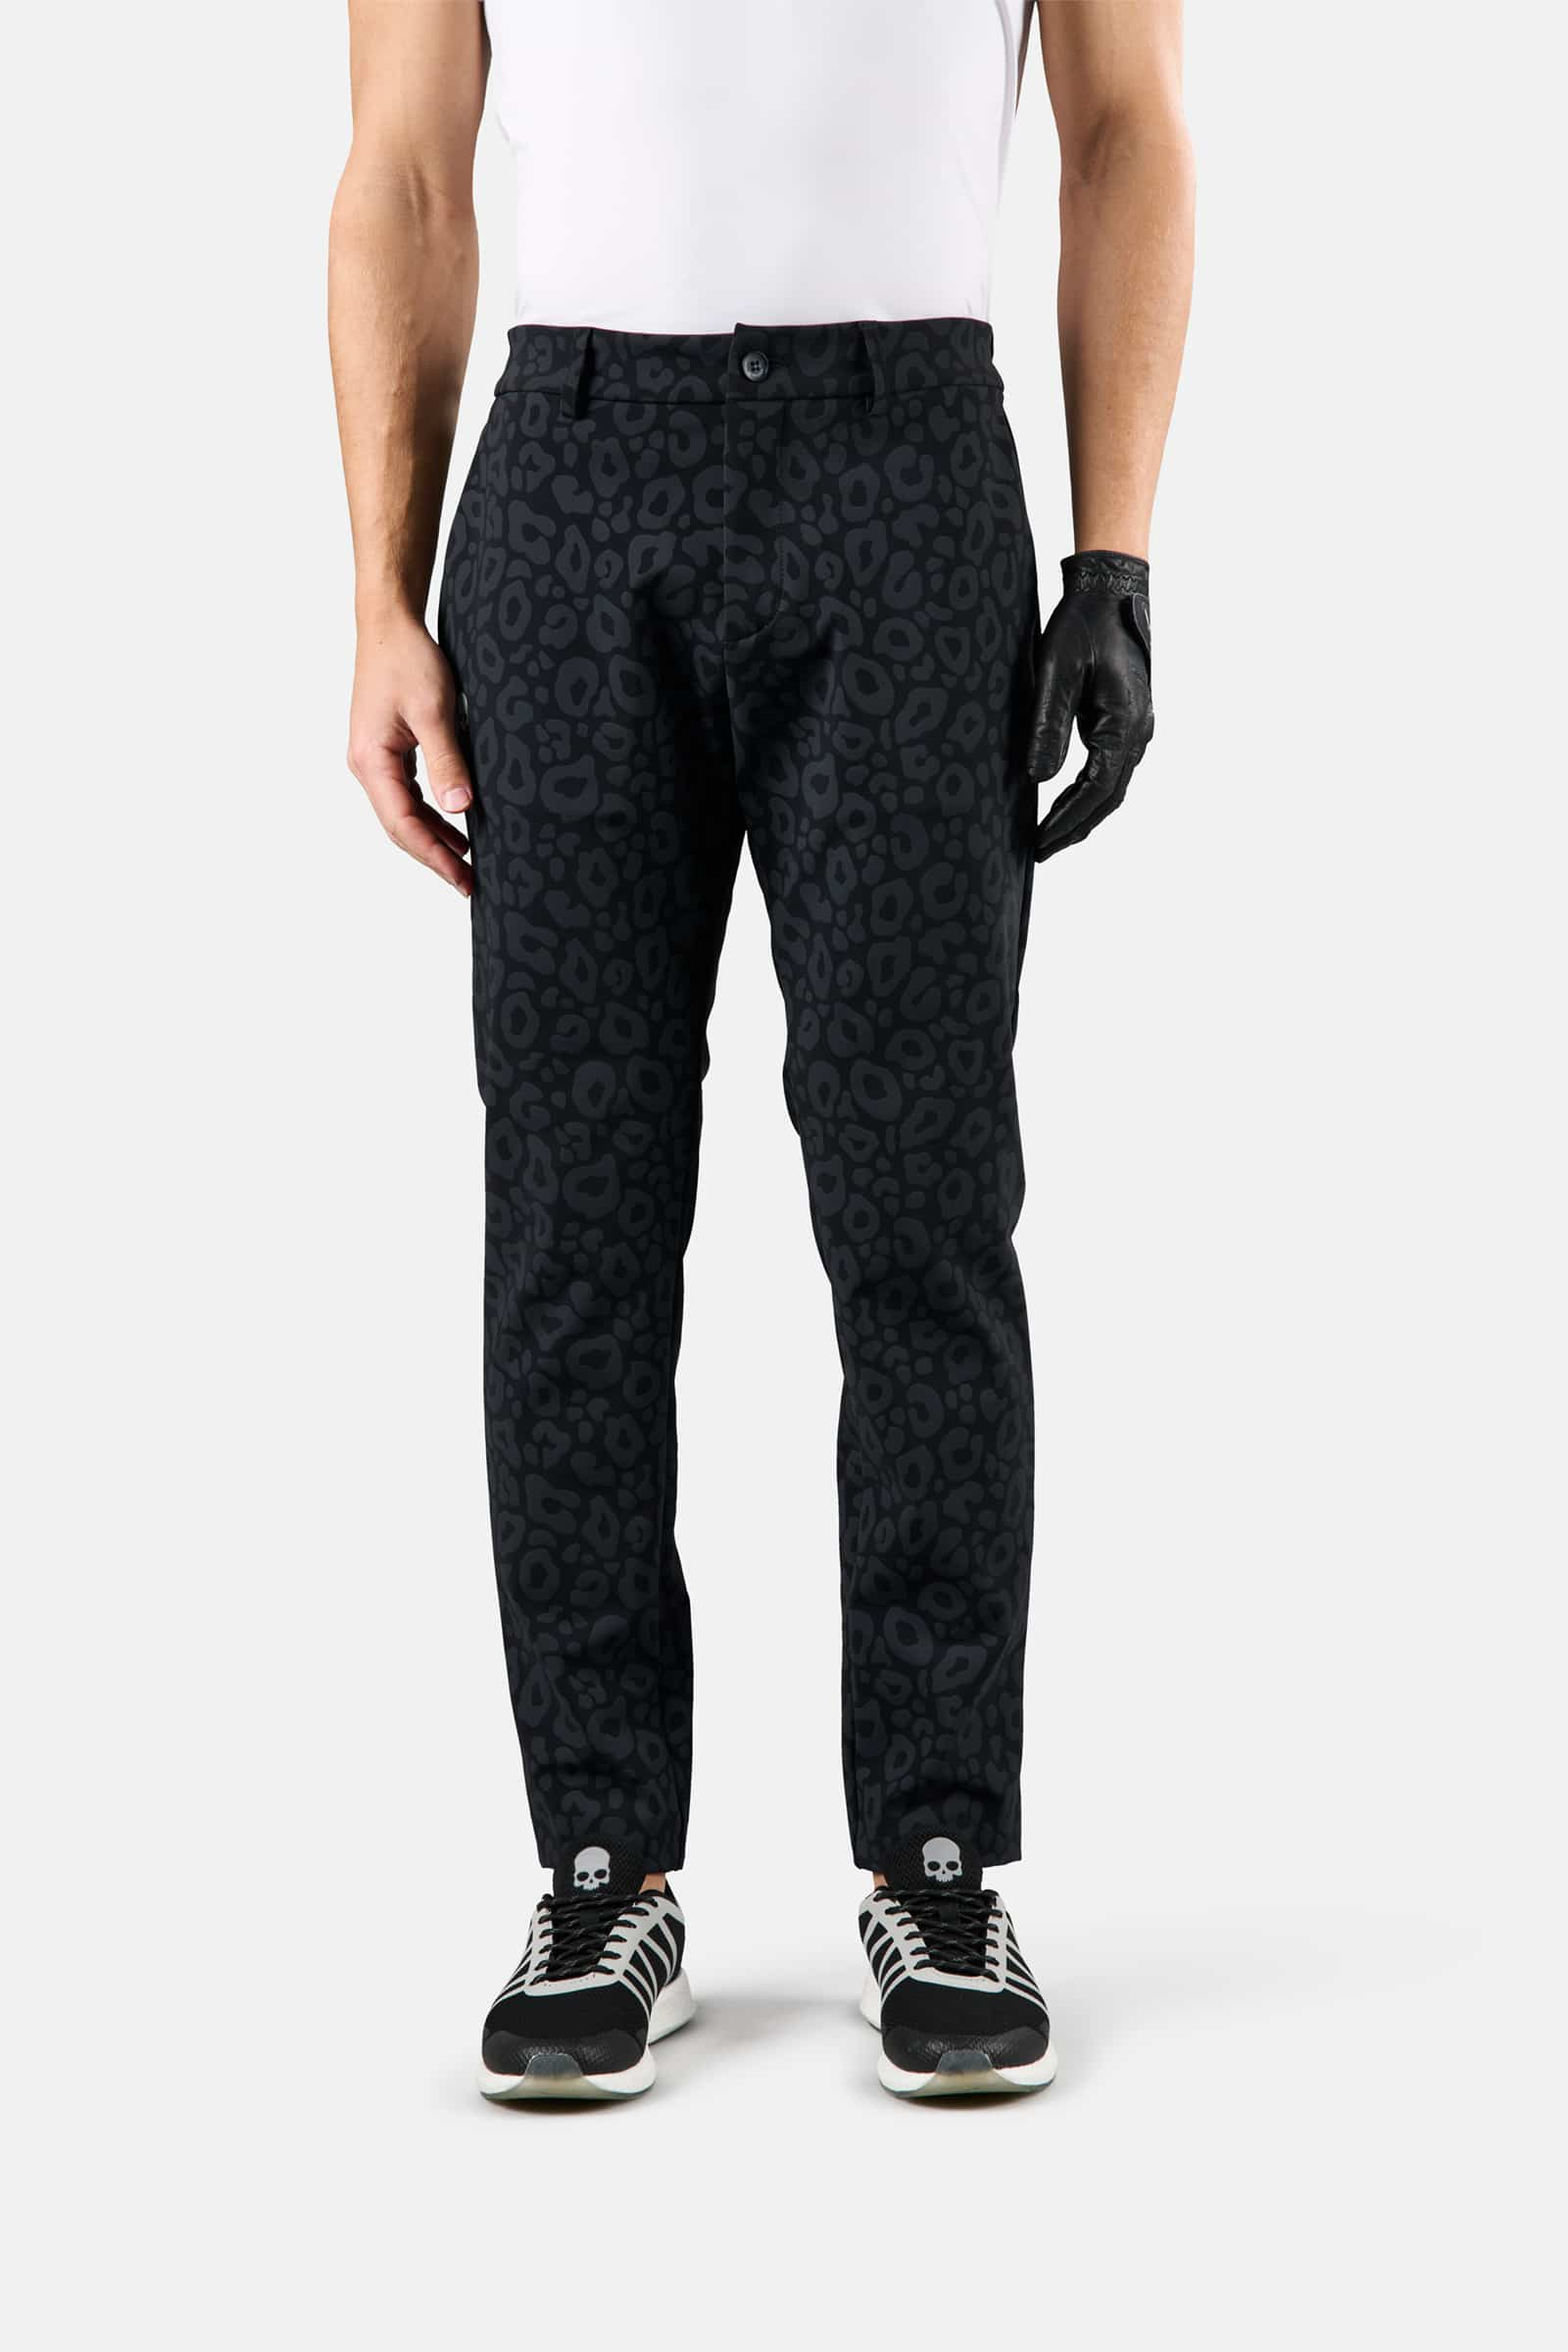 Pantaloni invernali da golf - PANTHER - Abbigliamento sportivo | Hydrogen